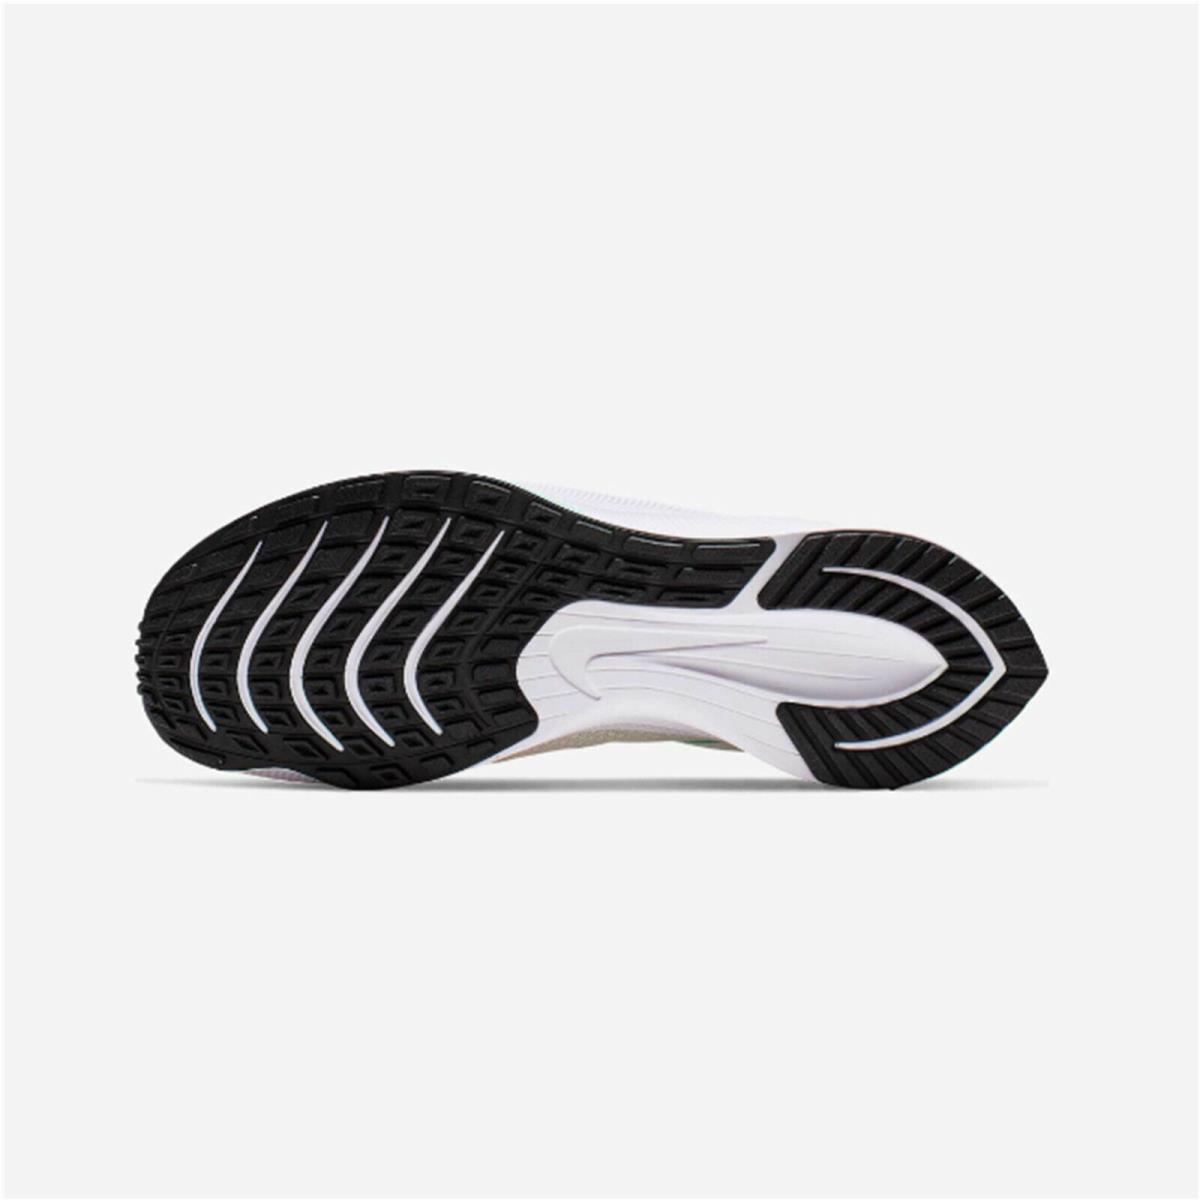 Nike shoes Zoom Fly - PALE IVORY/BLACK-HYPER JADE 3